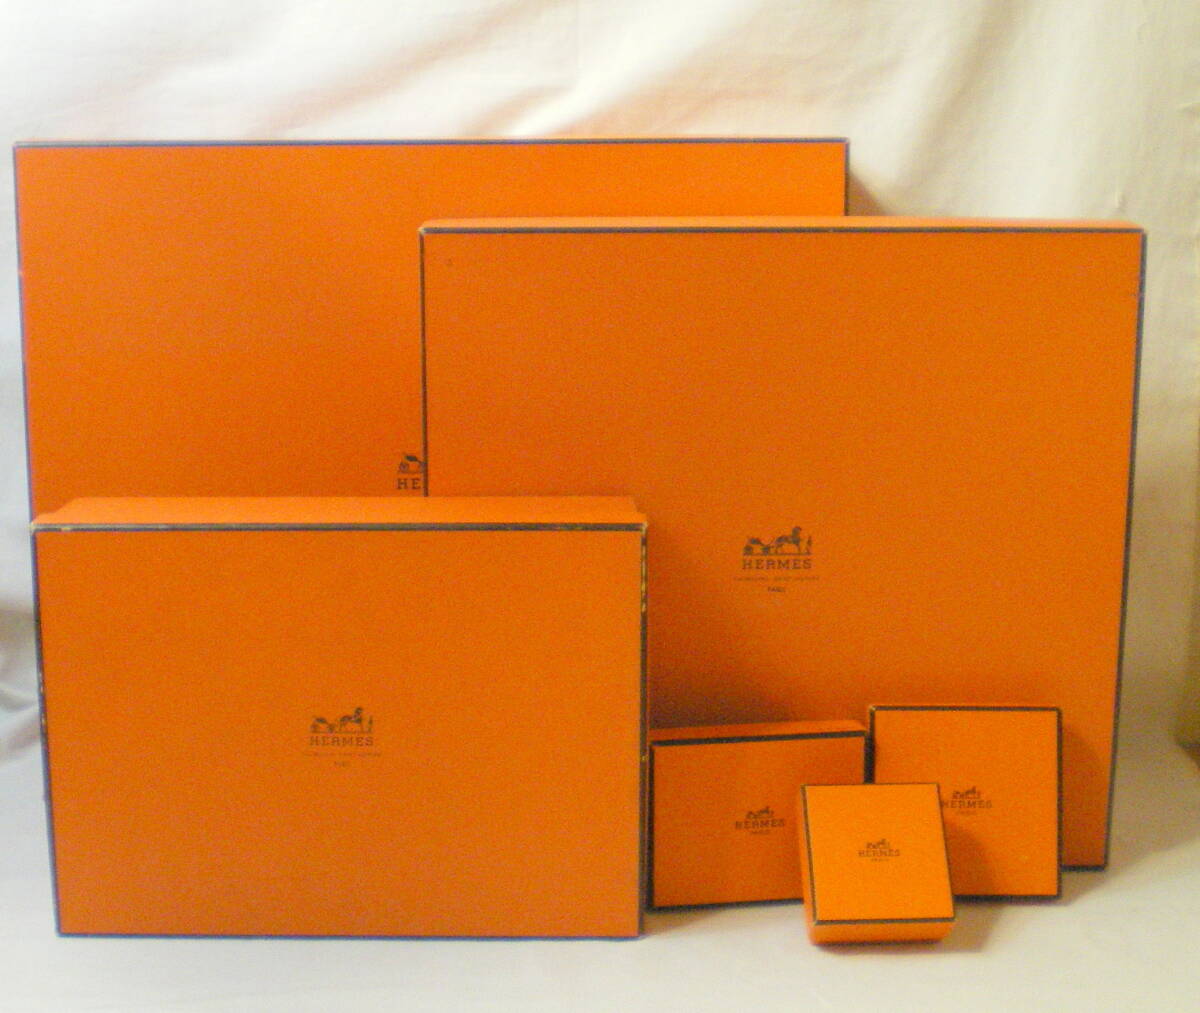 HERMES エルメス 空箱 まとめ 6点 空き箱 ボックス BOX オレンジの画像1